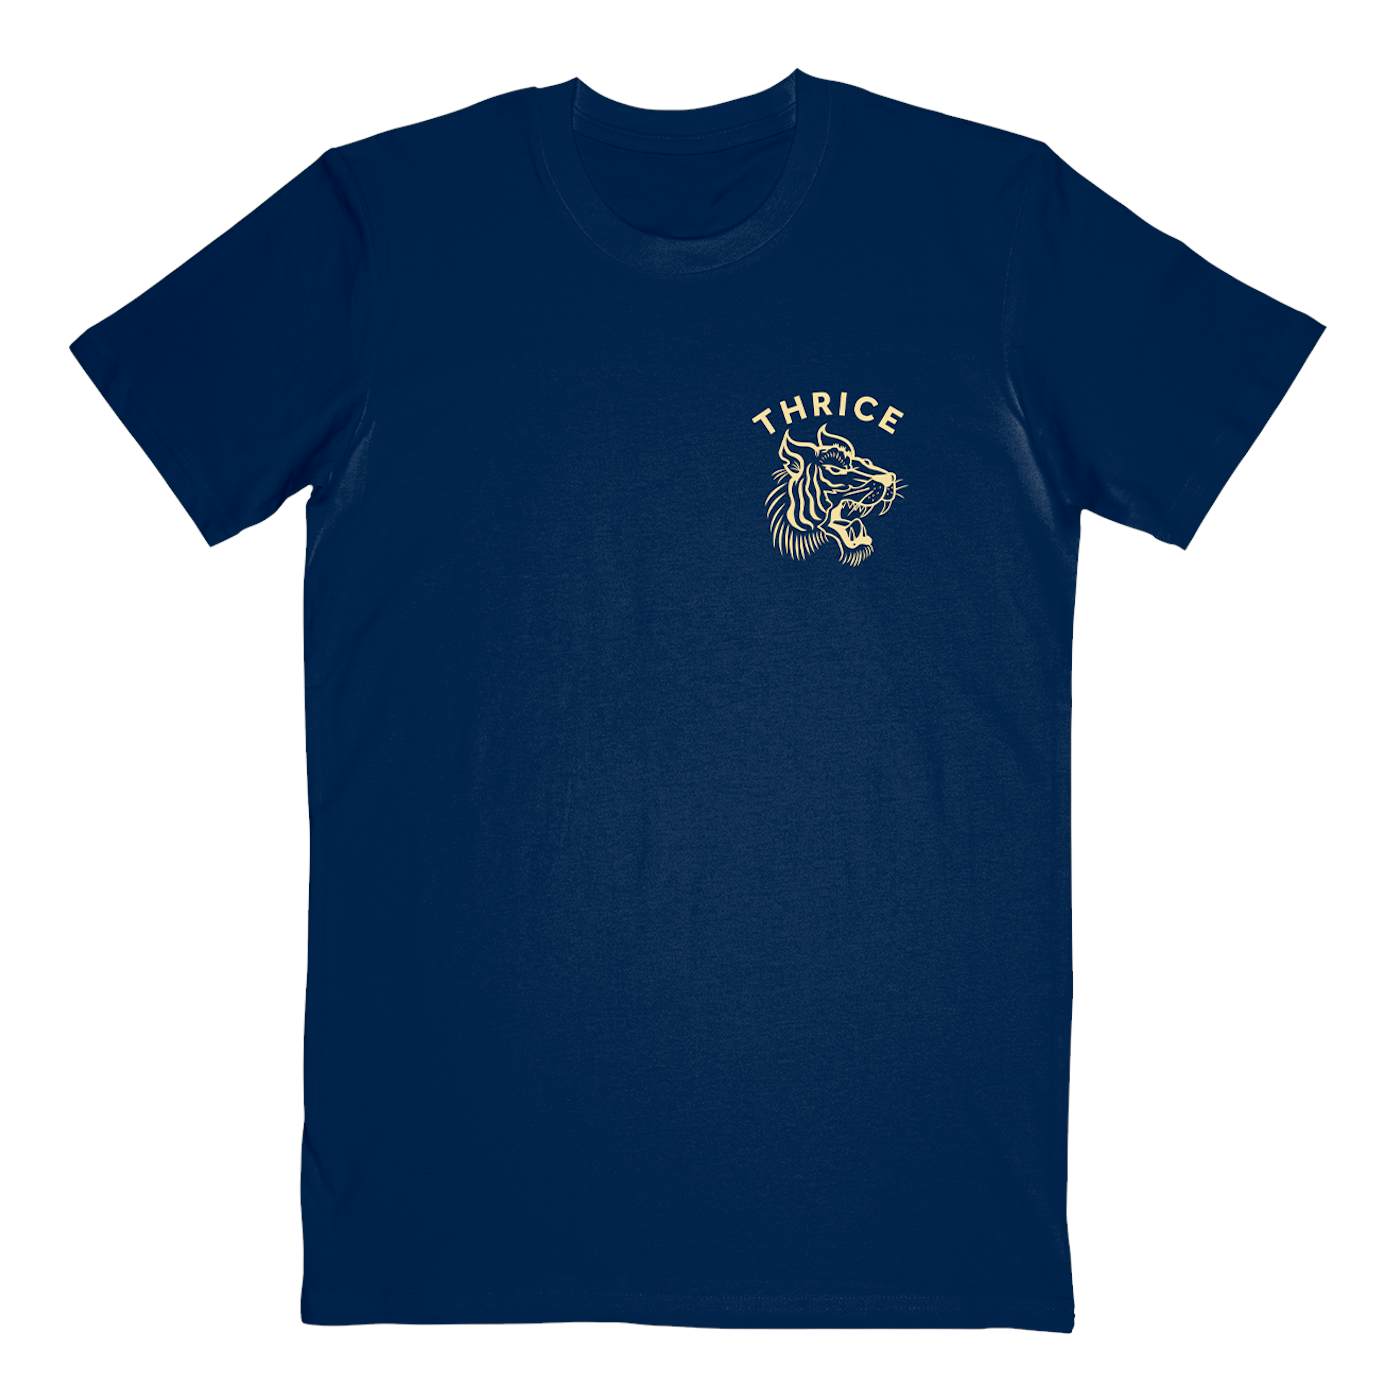 Thrice "Tiger" T-Shirt